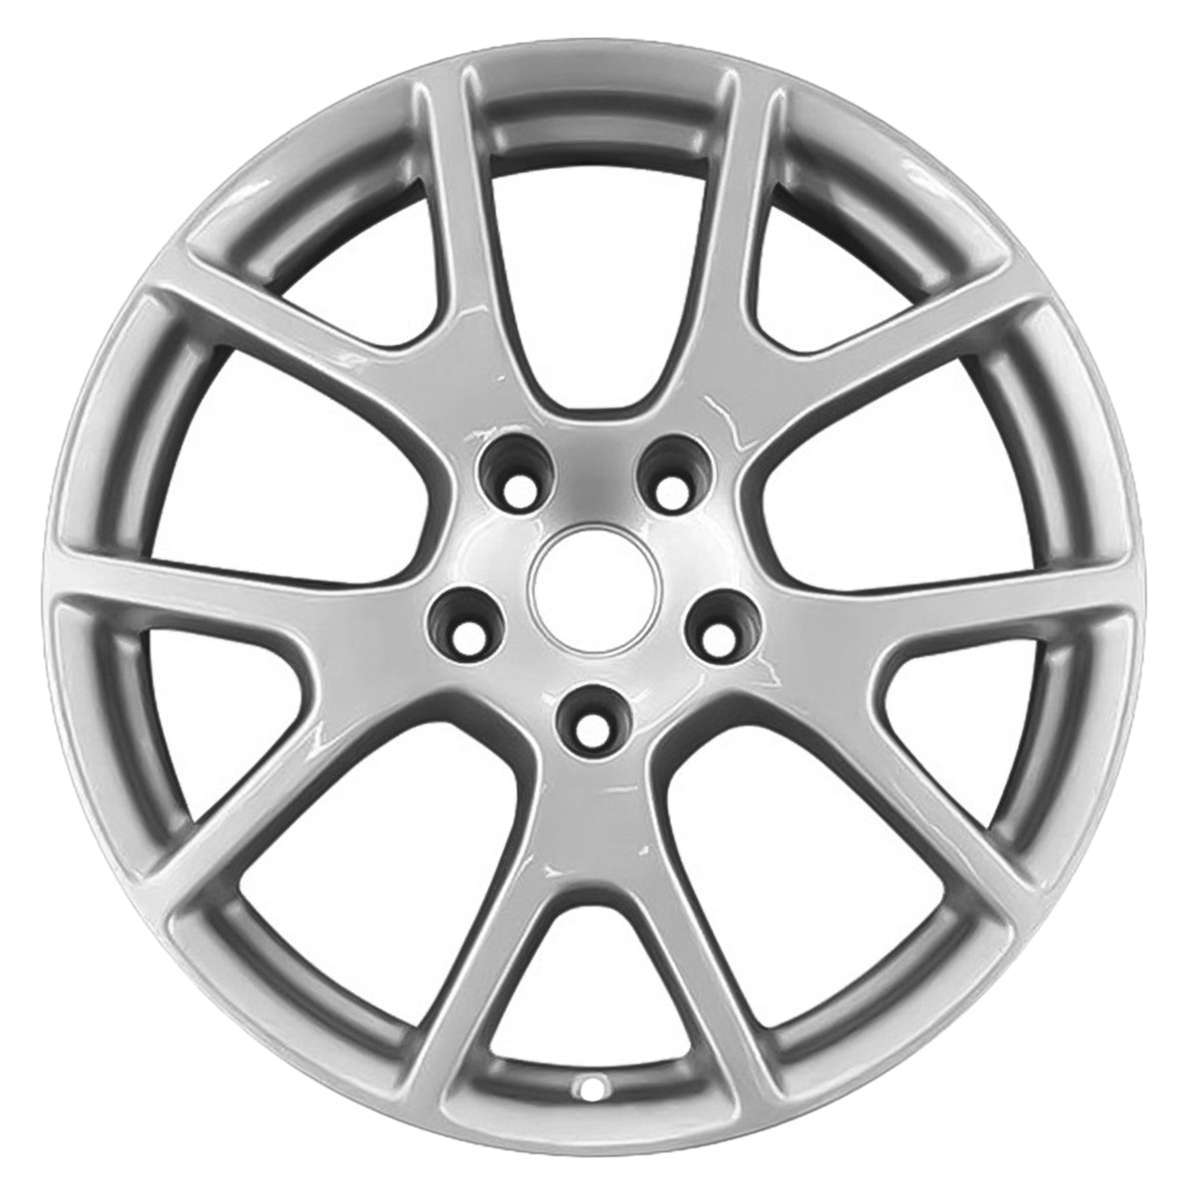 2014 Dodge Journey 19" OEM Wheel Rim W2500S